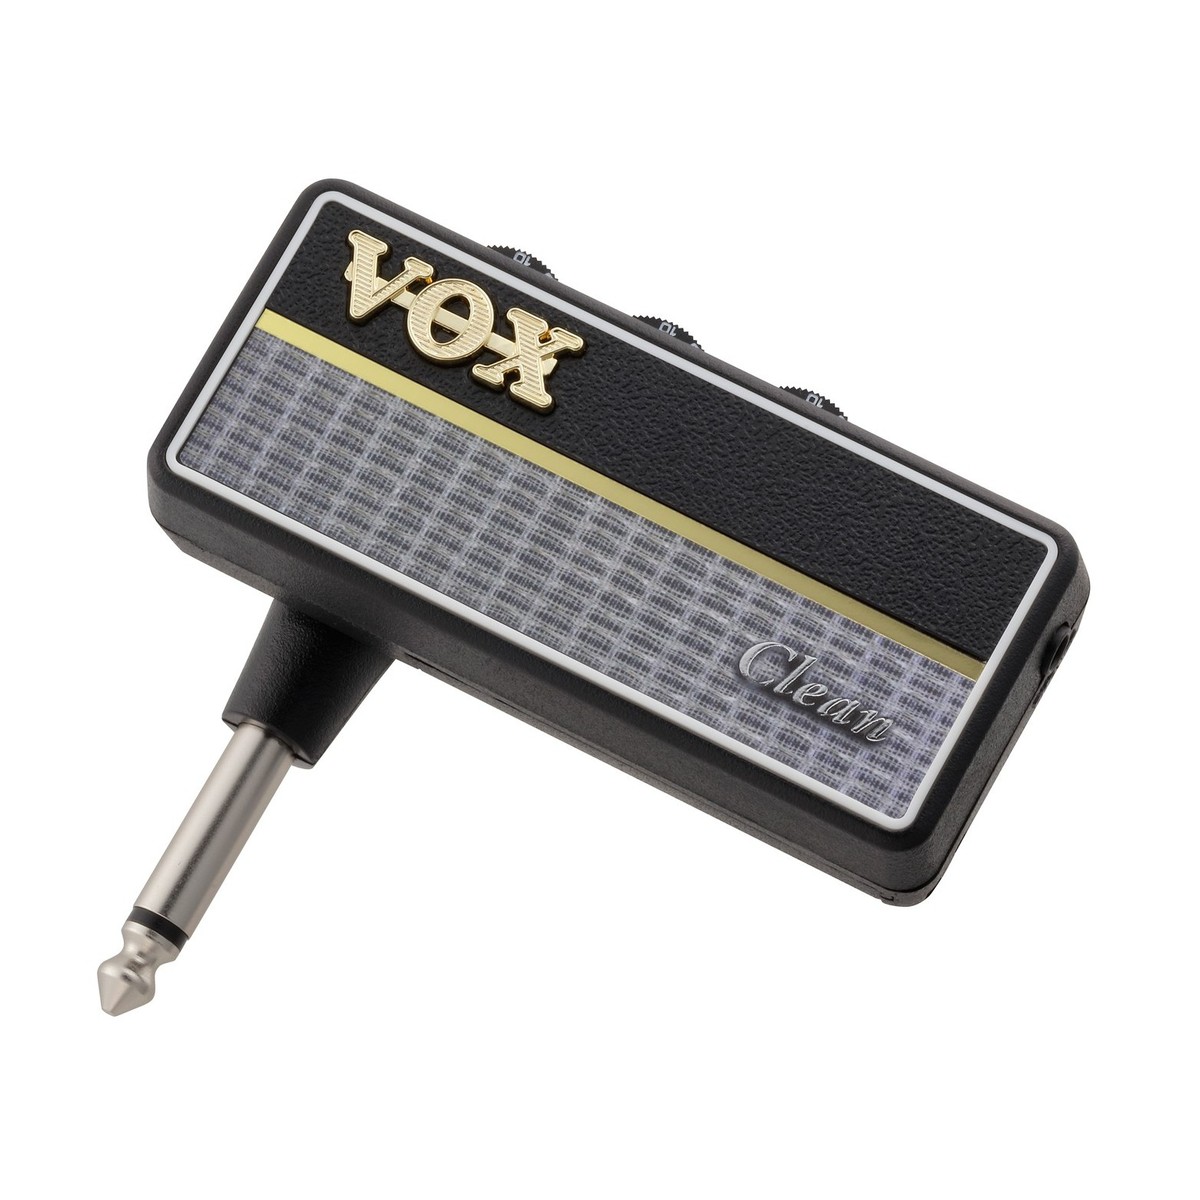 Vox Amplug 2 Clean